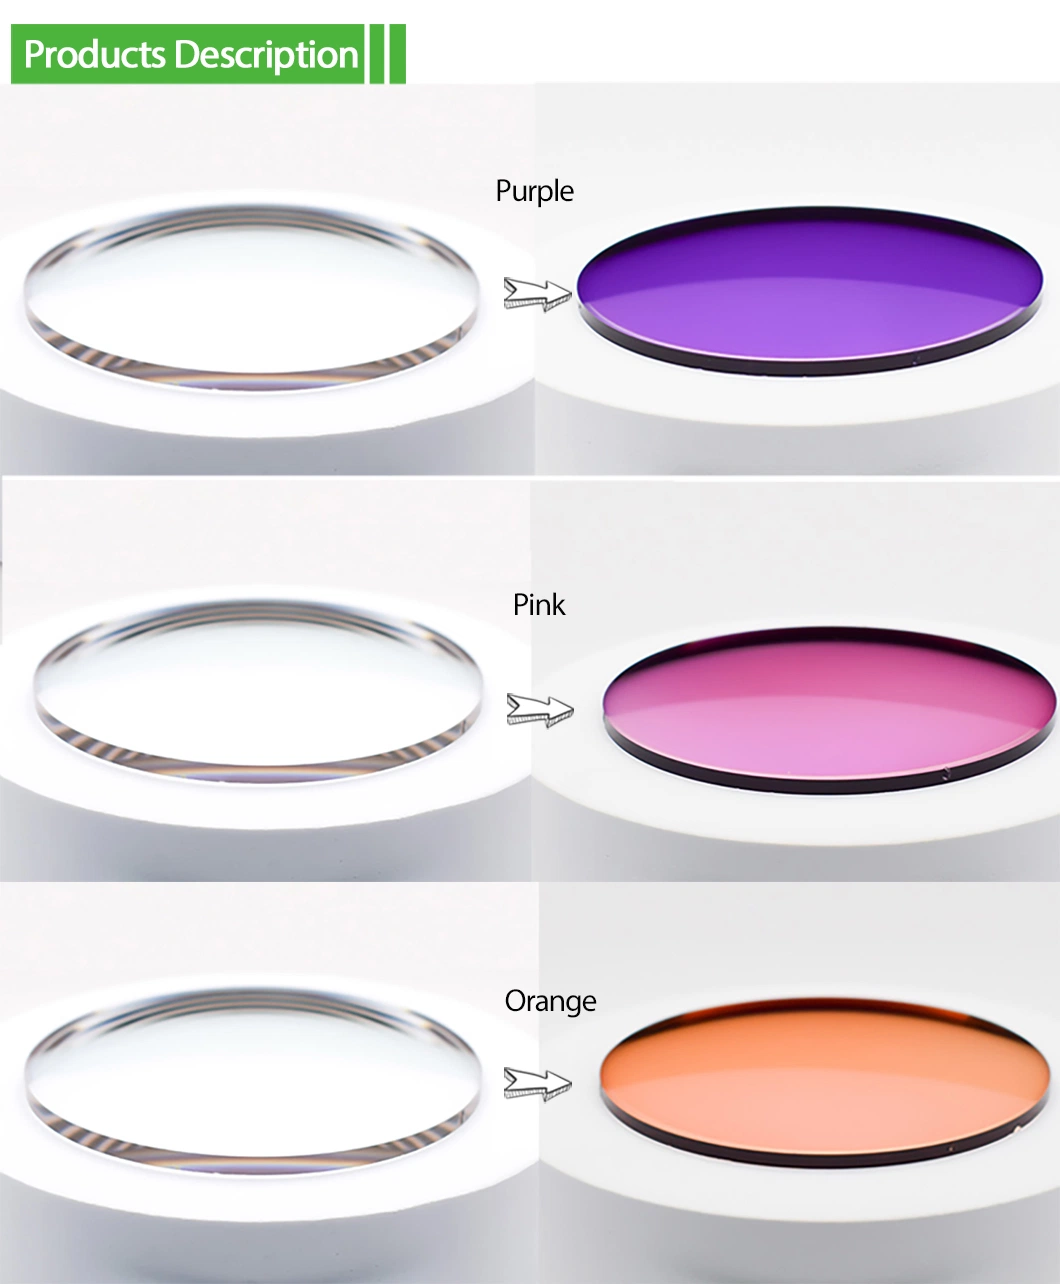 Hot Sale Middle Index 1.56 Photochromic Pink Hmc Eyeglasses Optical Lenses